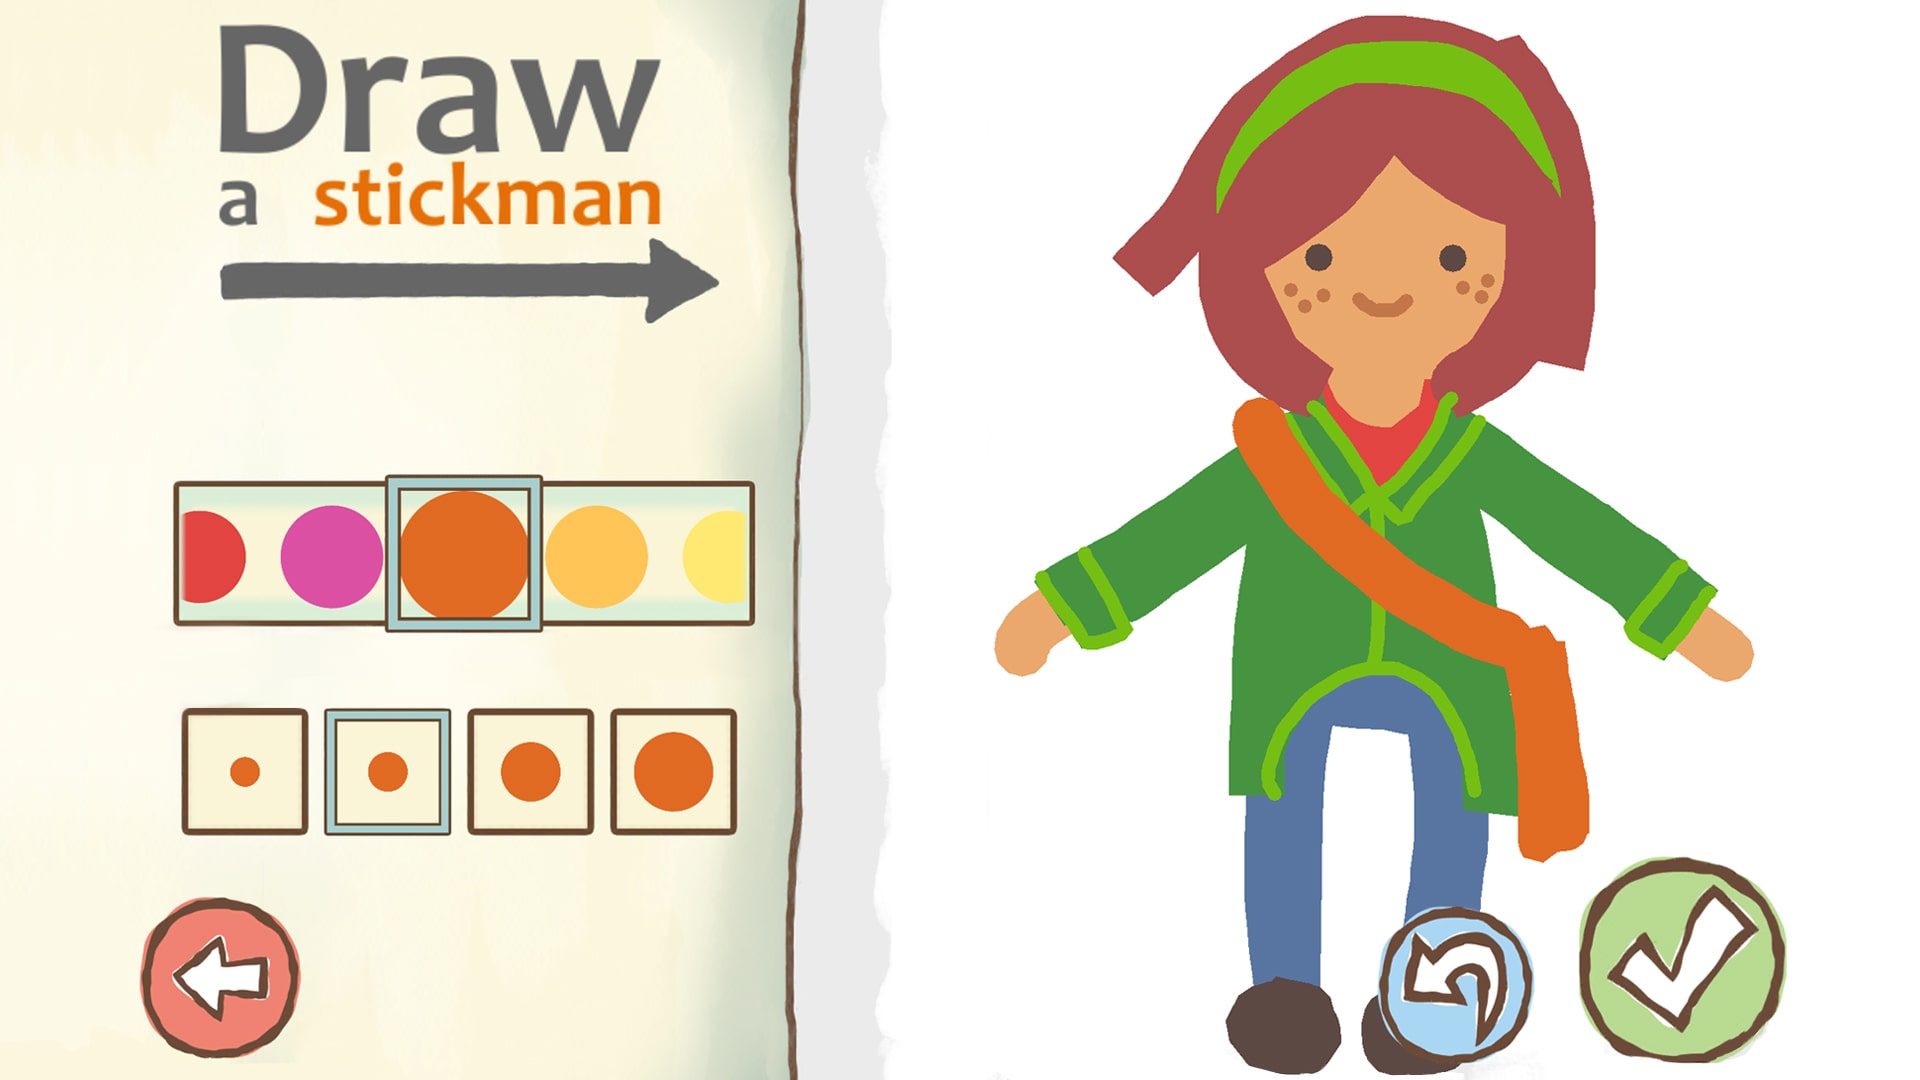 Draw A Stickman: EPIC 2 Game - Stickman Game 